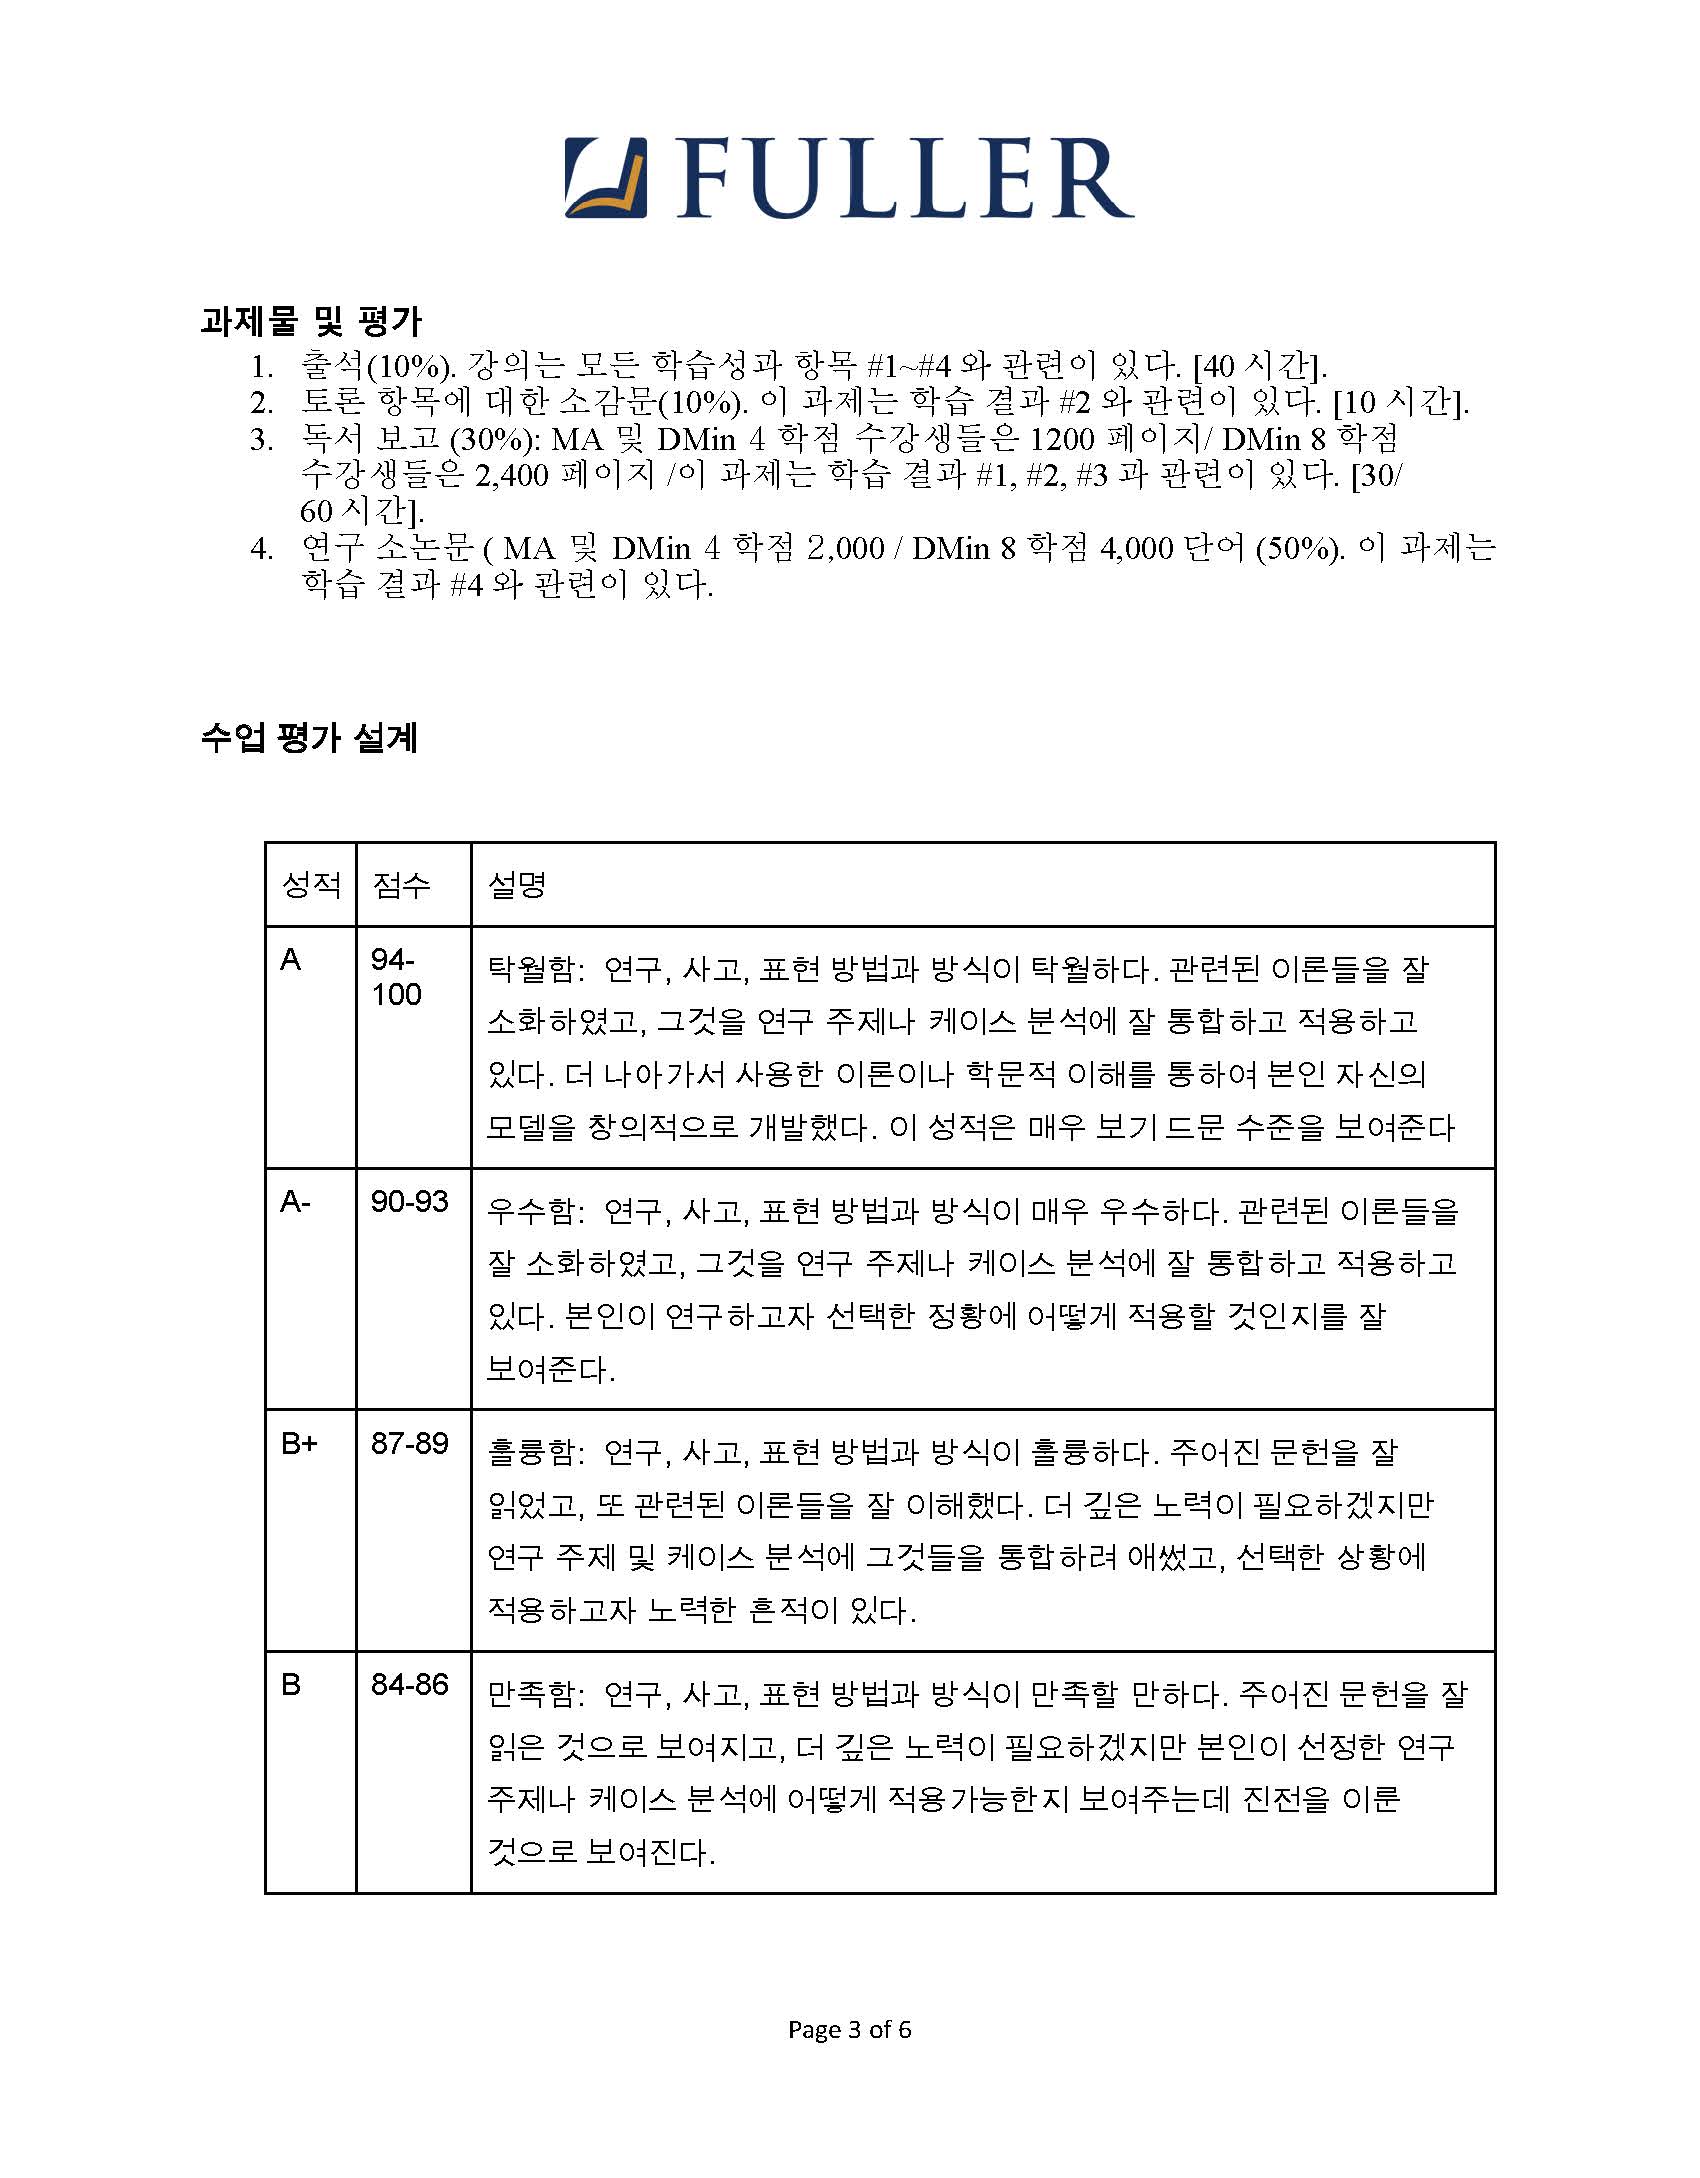 MC527_MK755 Syllabus (Korean)_Page_3.jpg